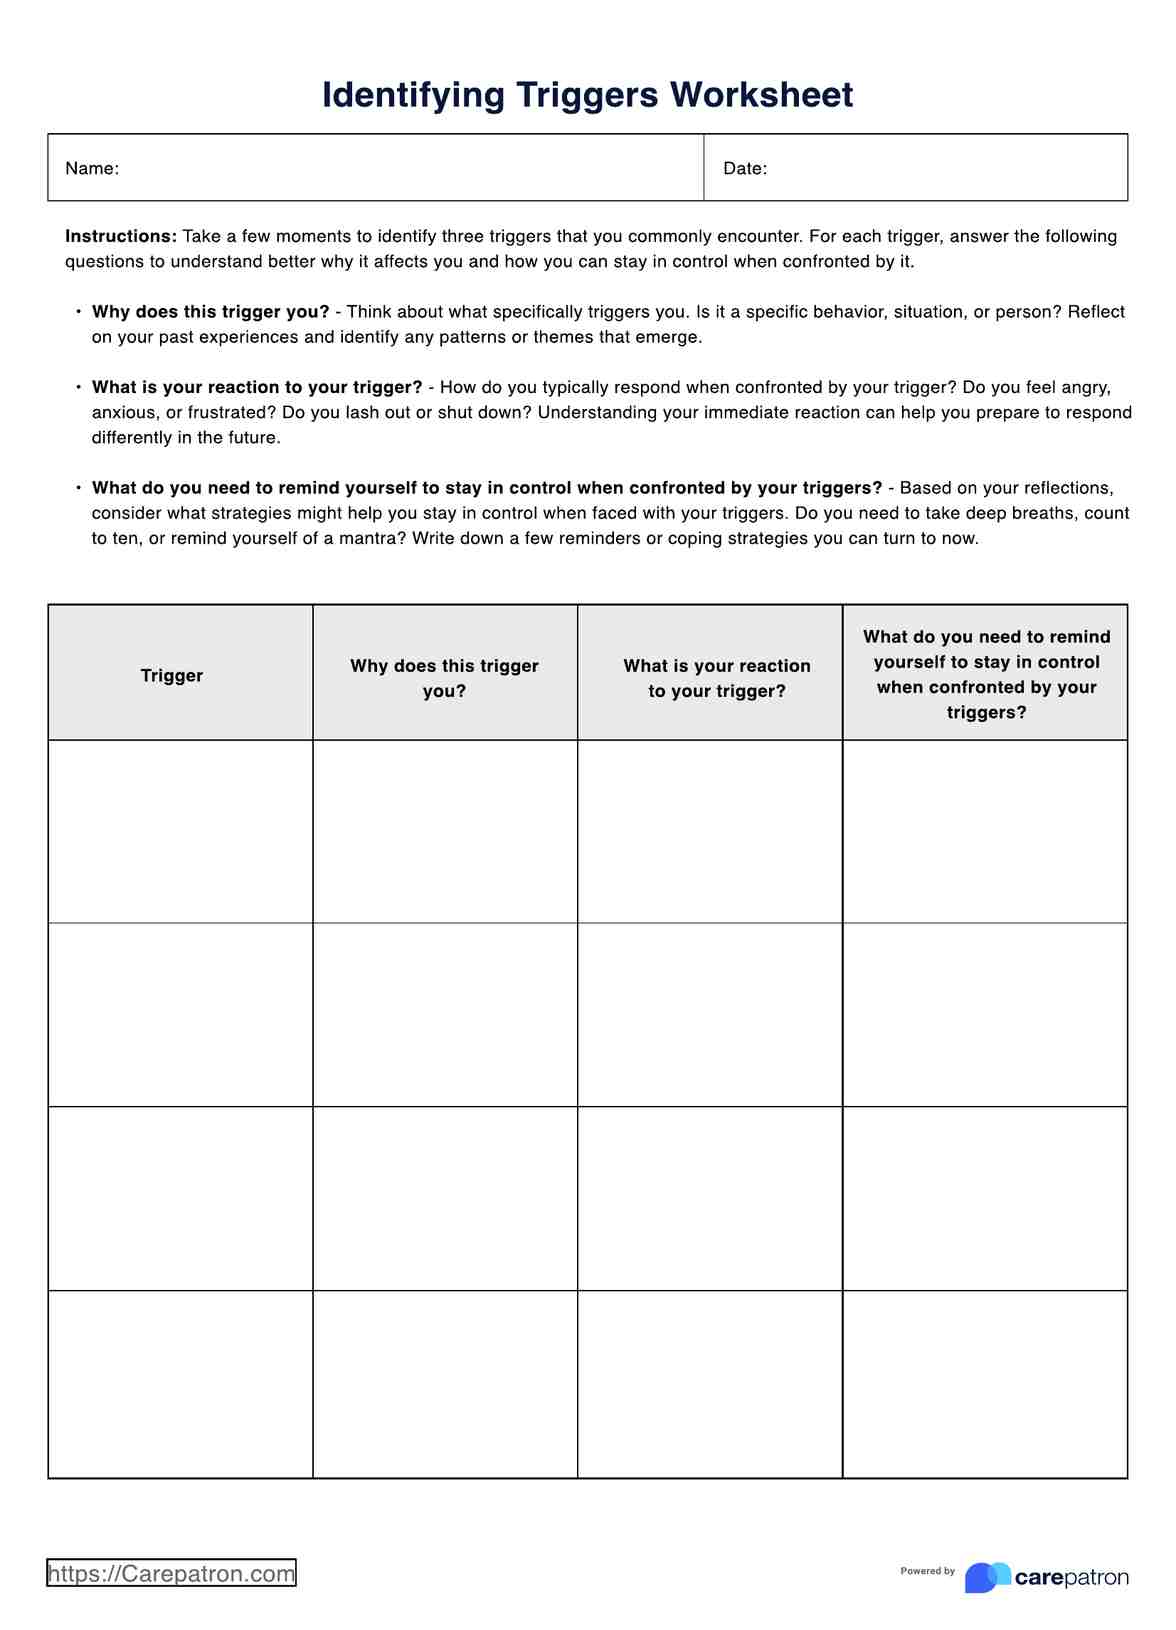 Identifying Triggers Worksheet PDF Example